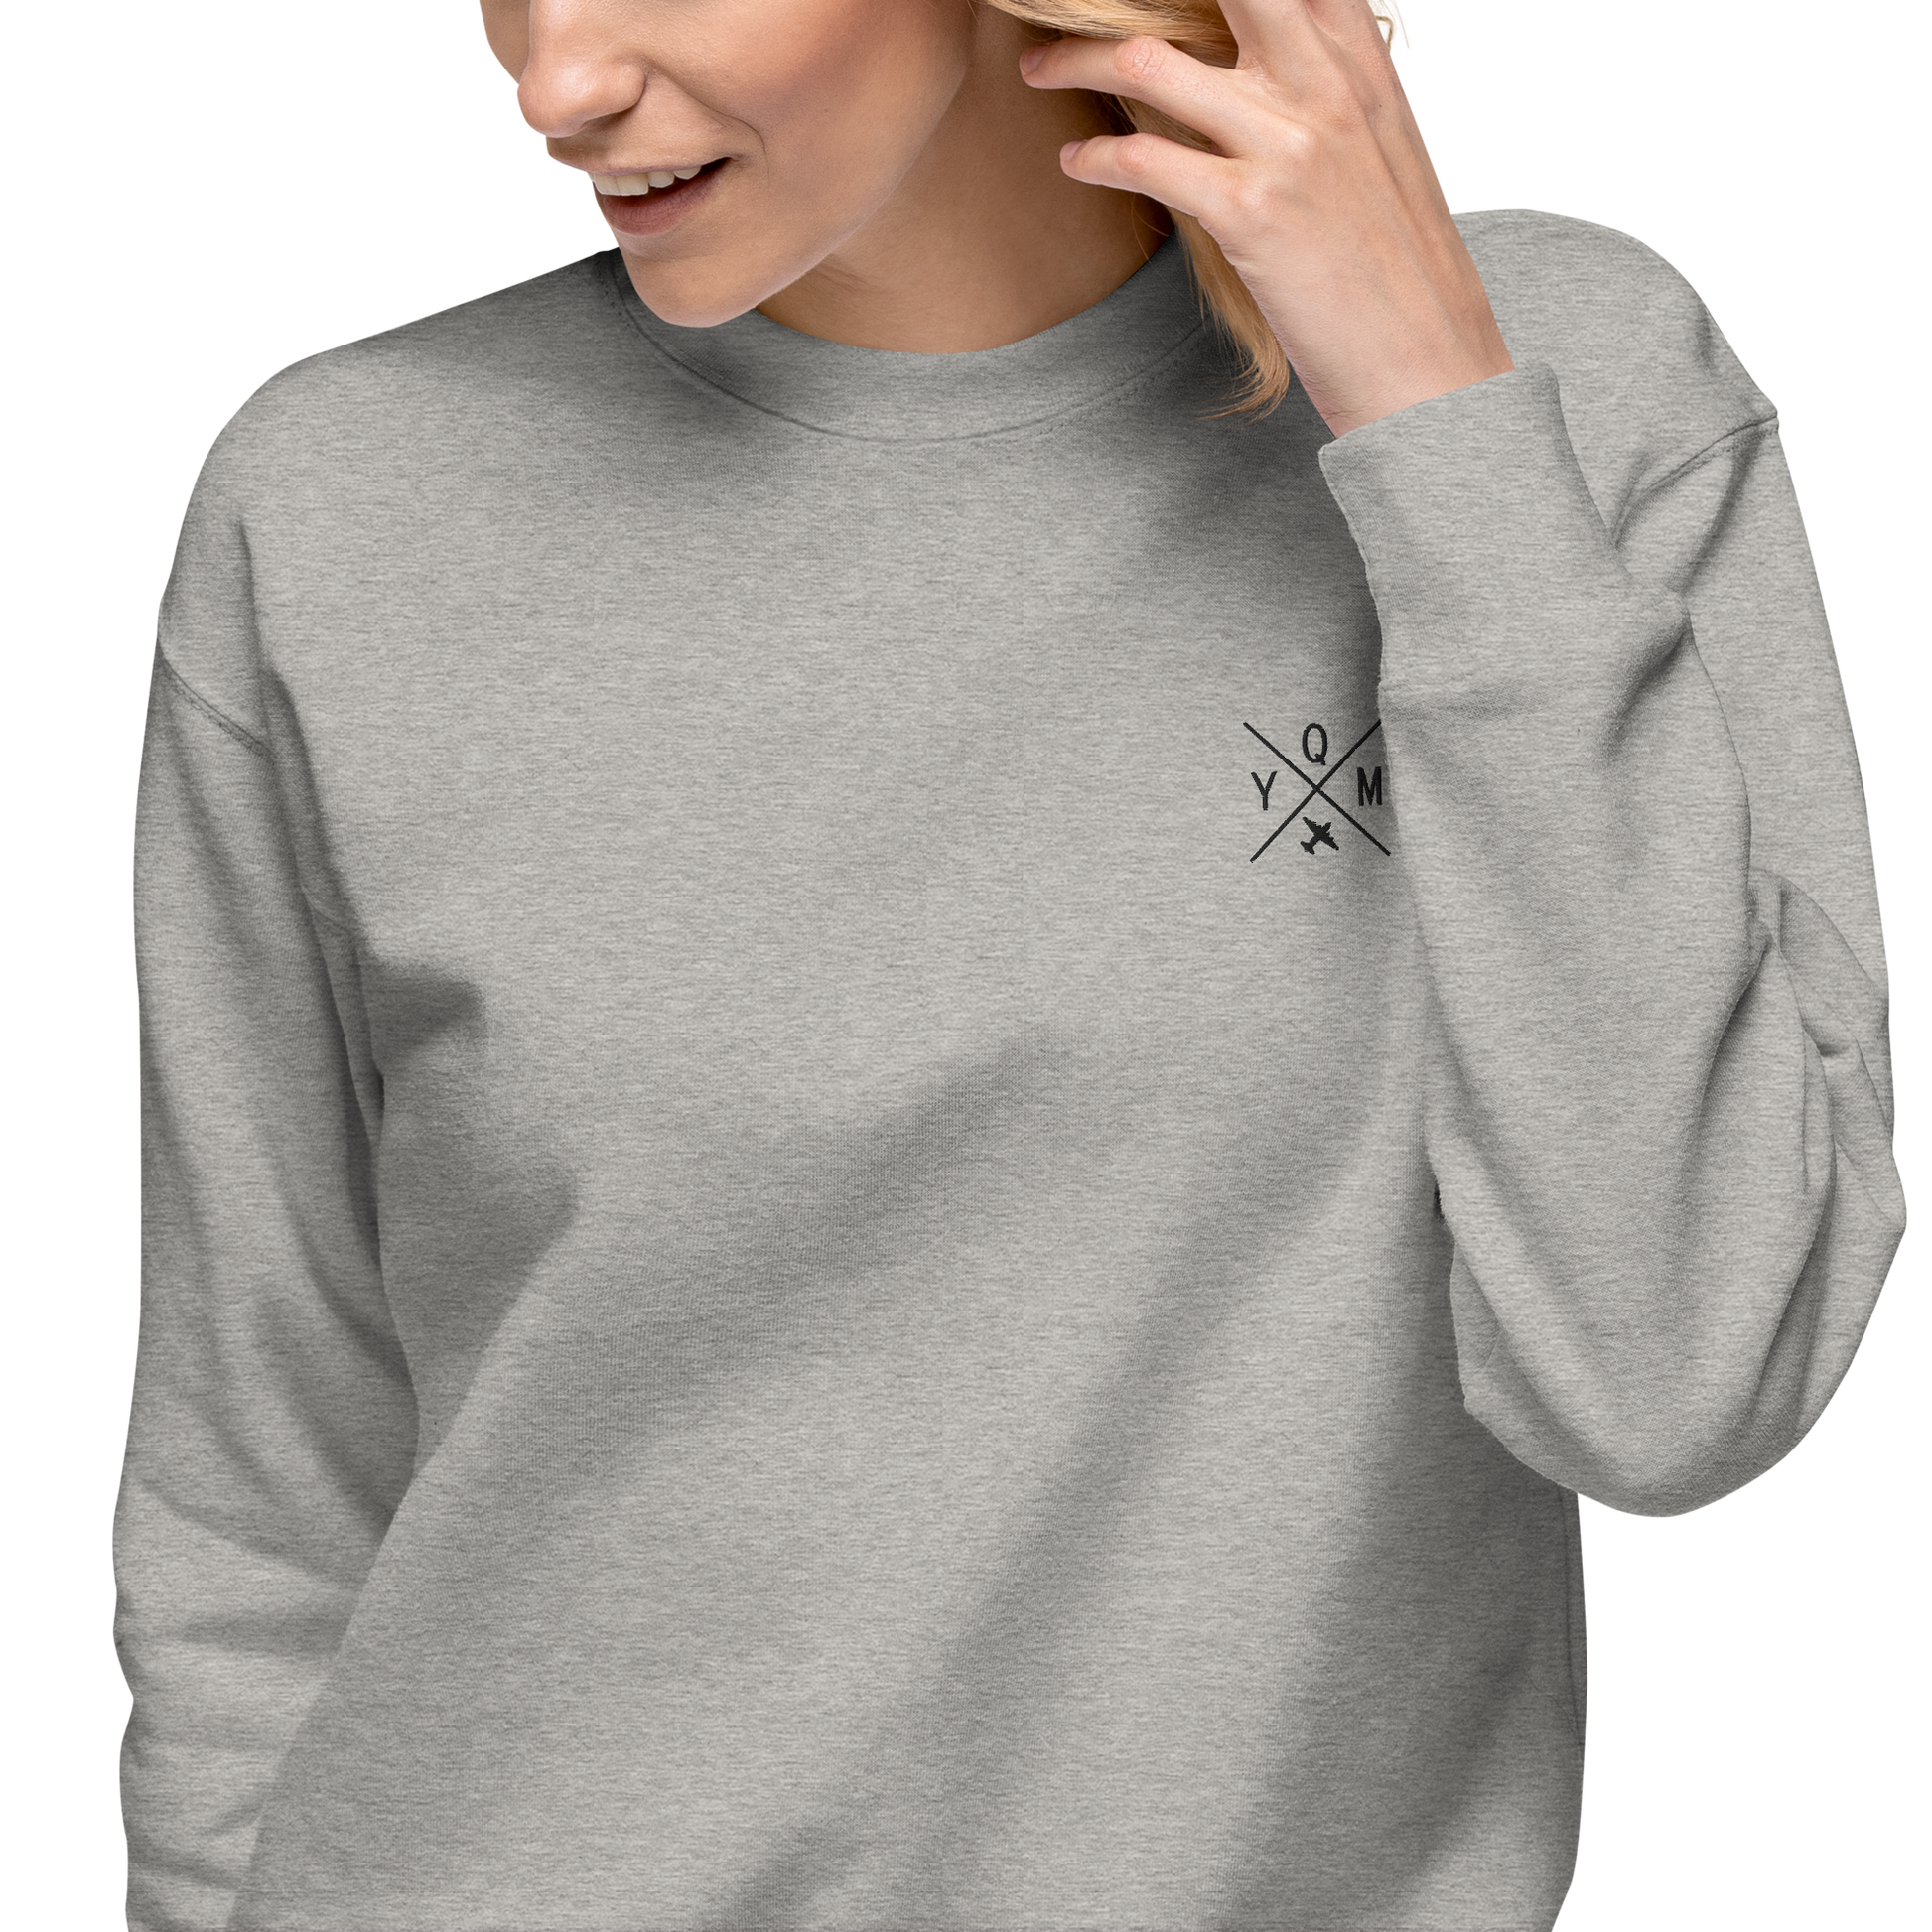 YHM Designs - YQM Moncton Premium Sweatshirt - Crossed-X Design with Airport Code and Vintage Propliner - Black Embroidery - Image 03